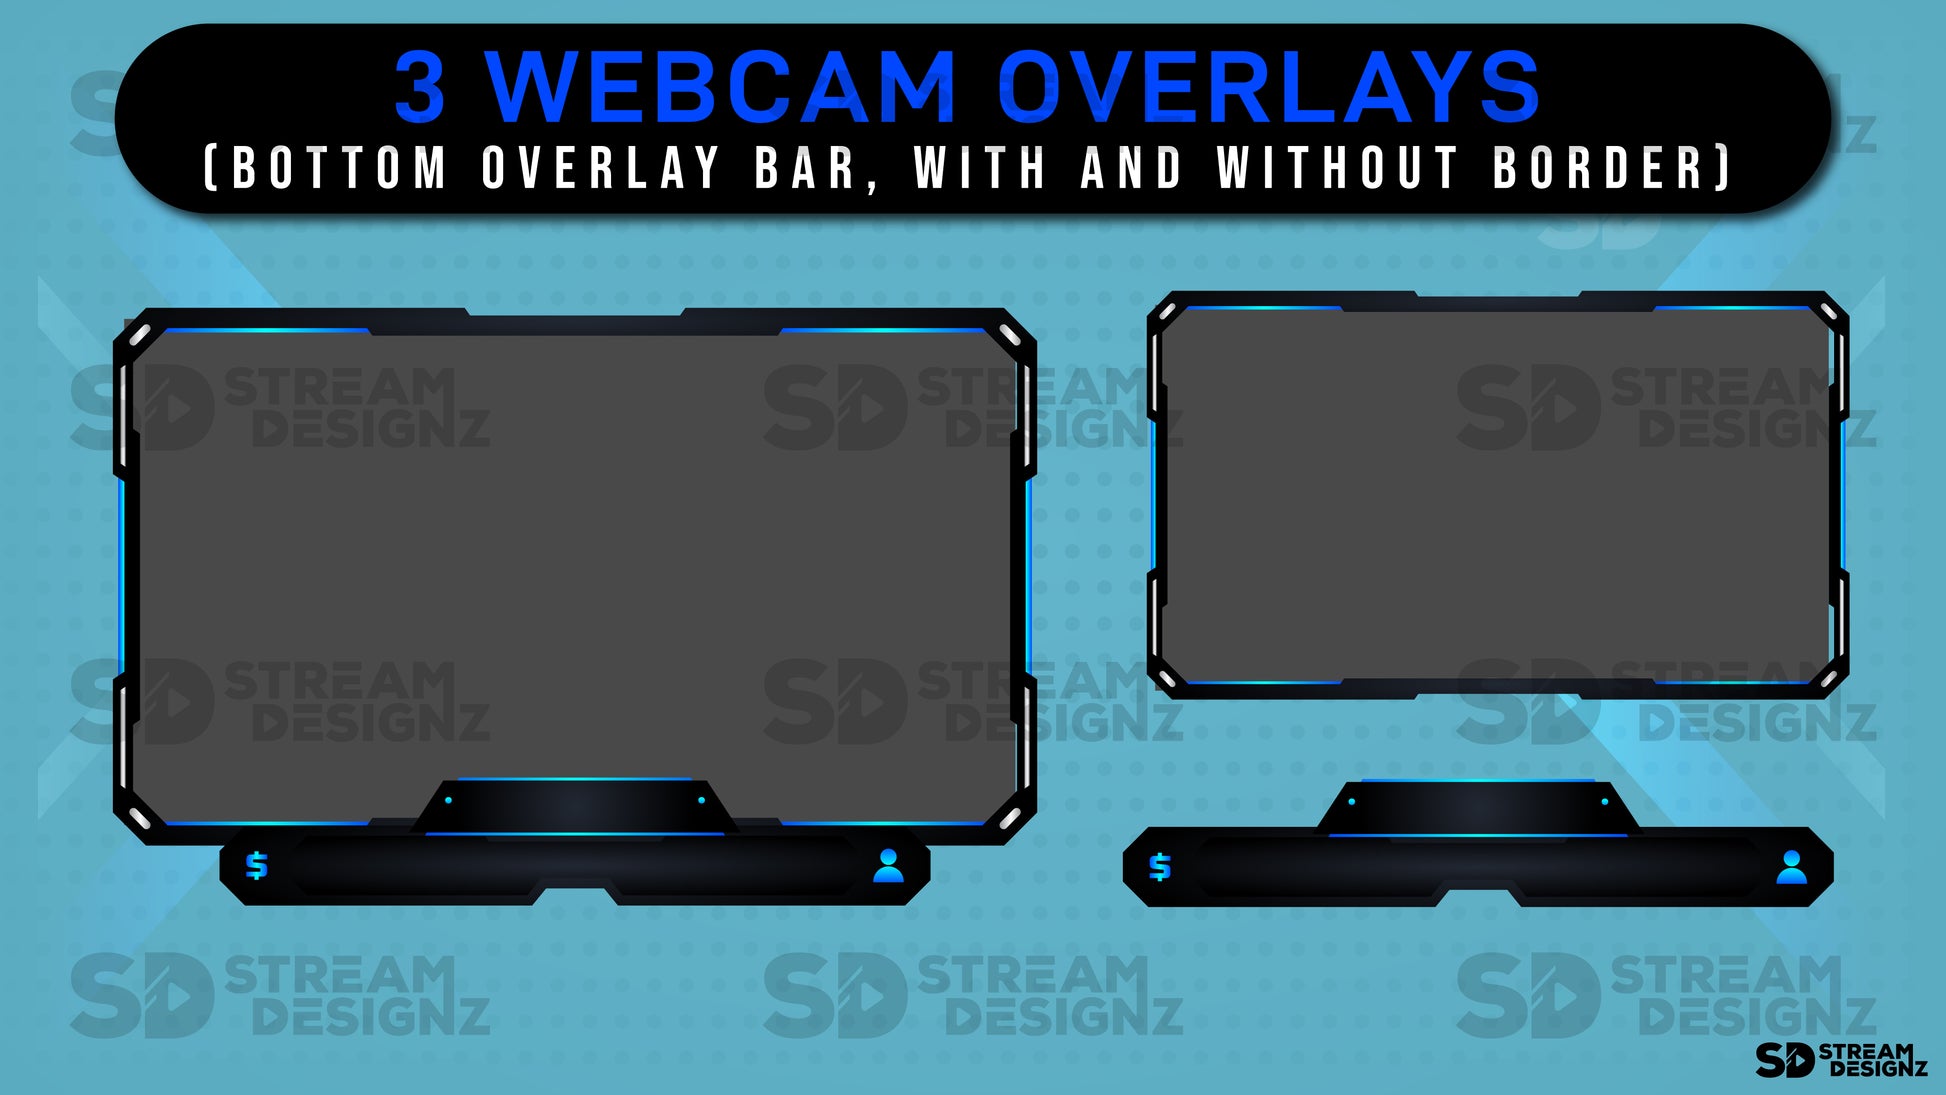 static stream overlay package - horizon - webcam overlays - stream designz